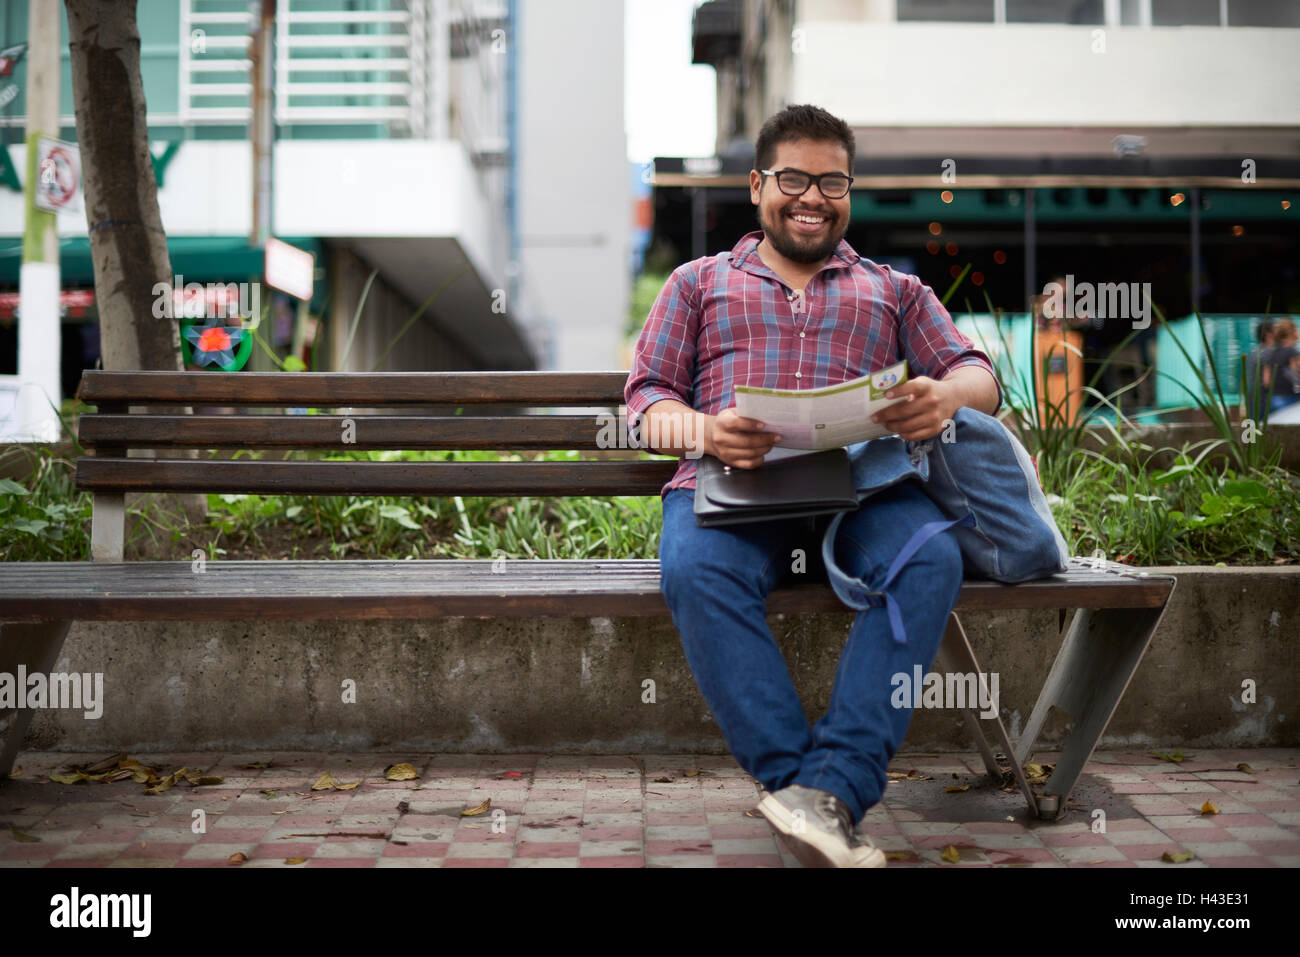 Hispanic man sitting on bench reading brochure Stock Photo